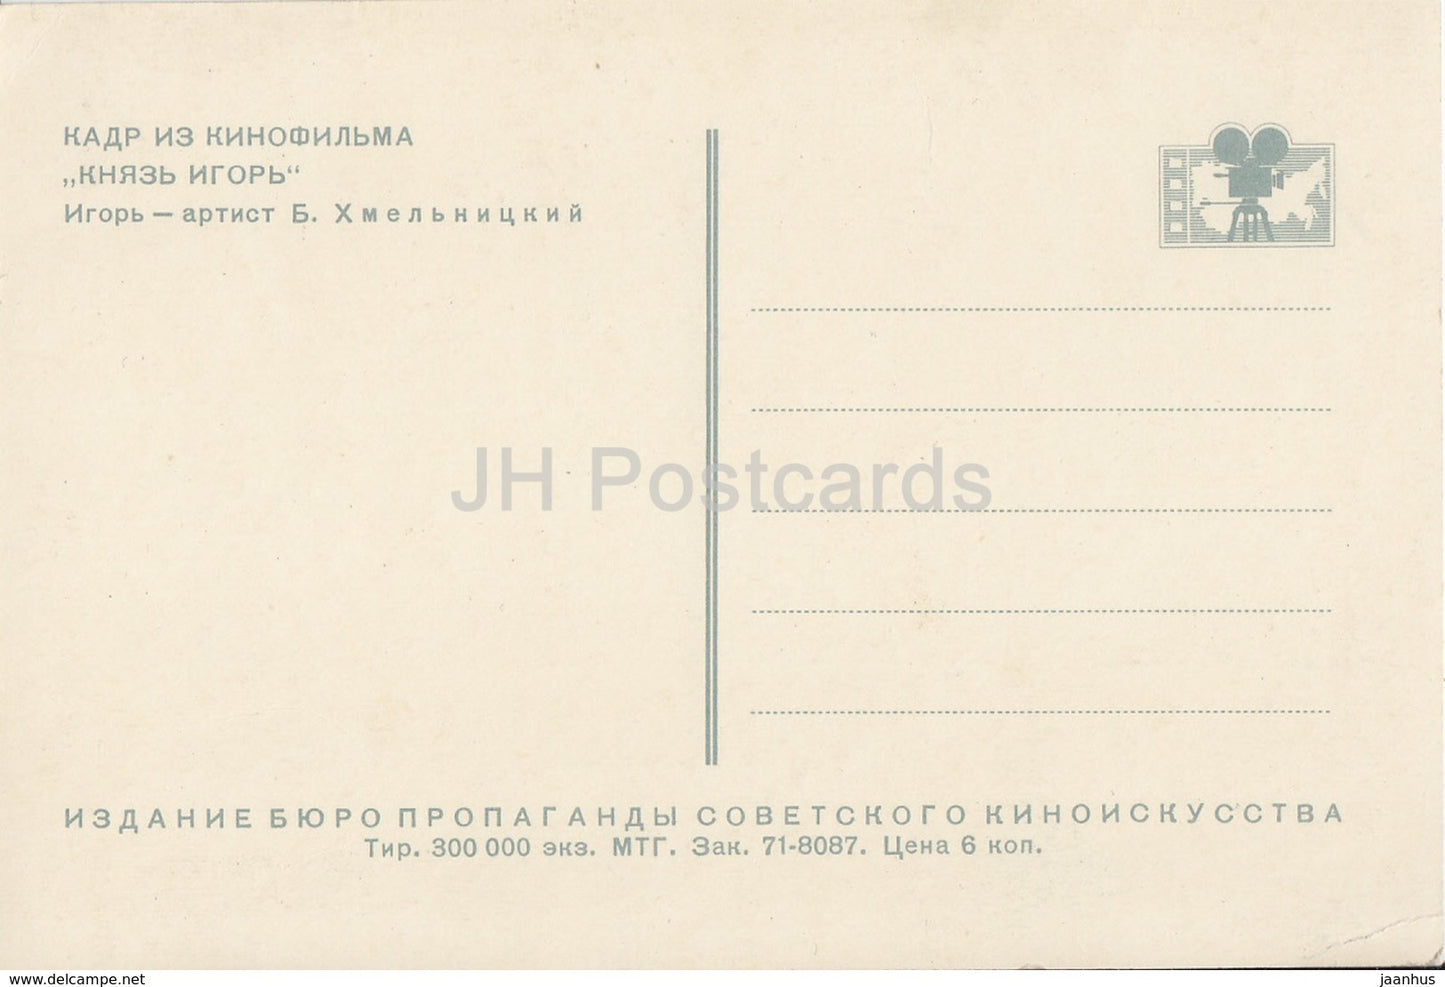 Prince Igor - movie - actor Boris Khmelnitsky - horse - 1973 - Ukraine USSR - unused - JH Postcards